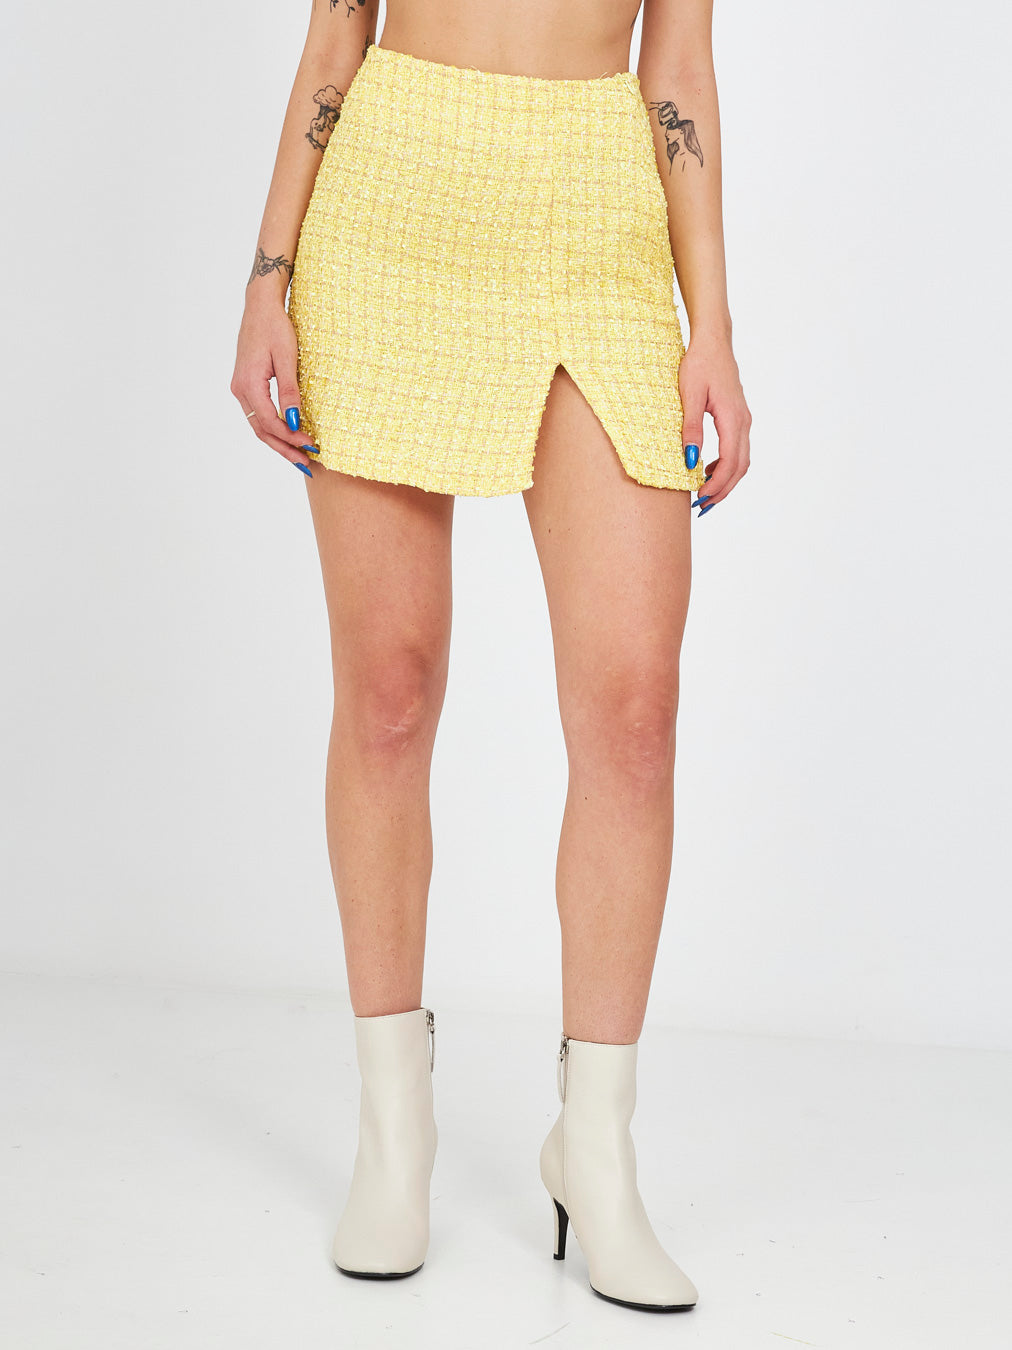 Glamorous yellow miniskirt